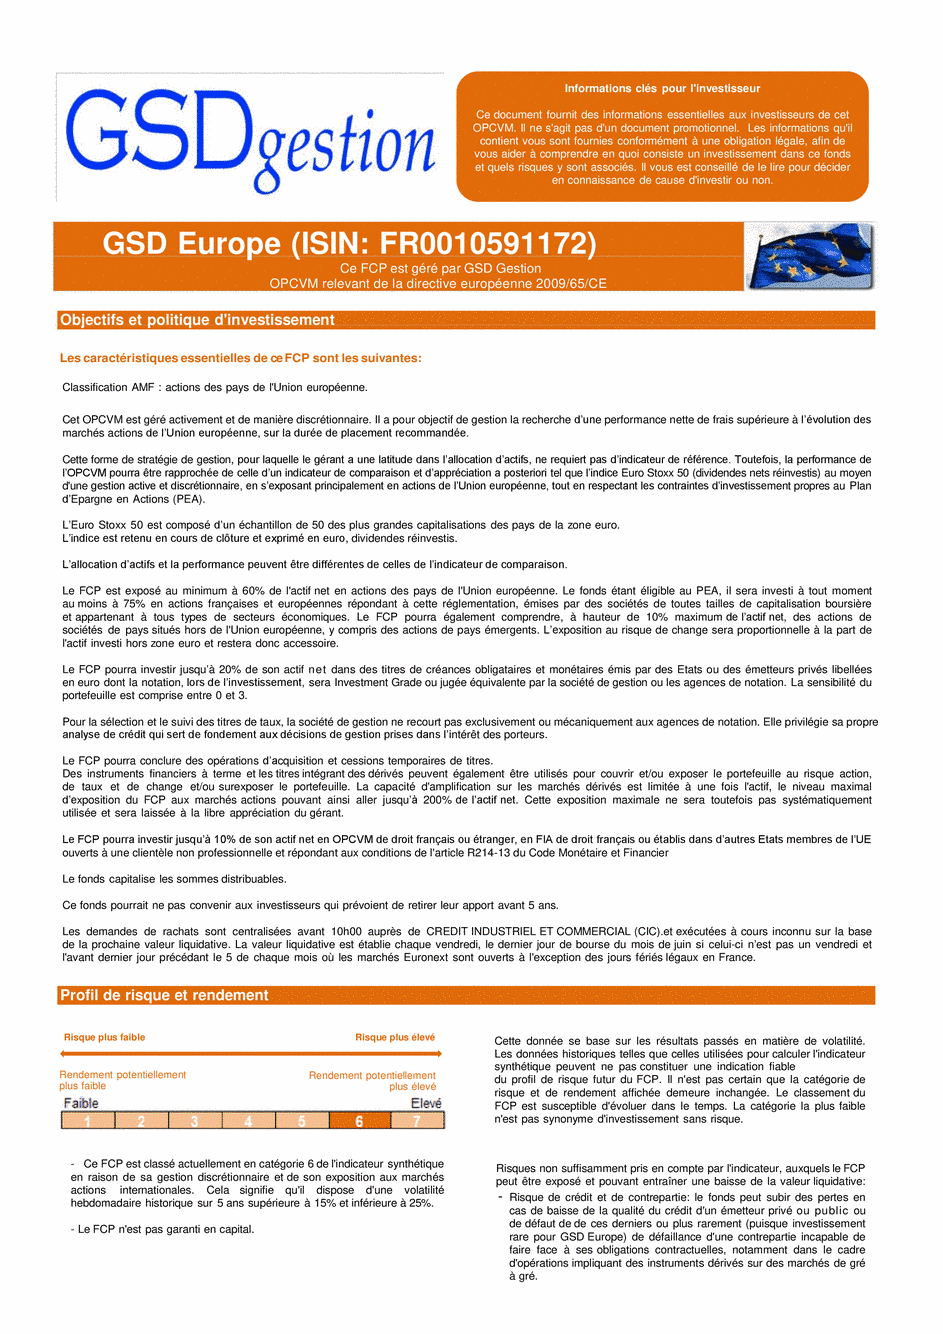 DICI-Prospectus Complet GSD Europe - 13/01/2021 - Français